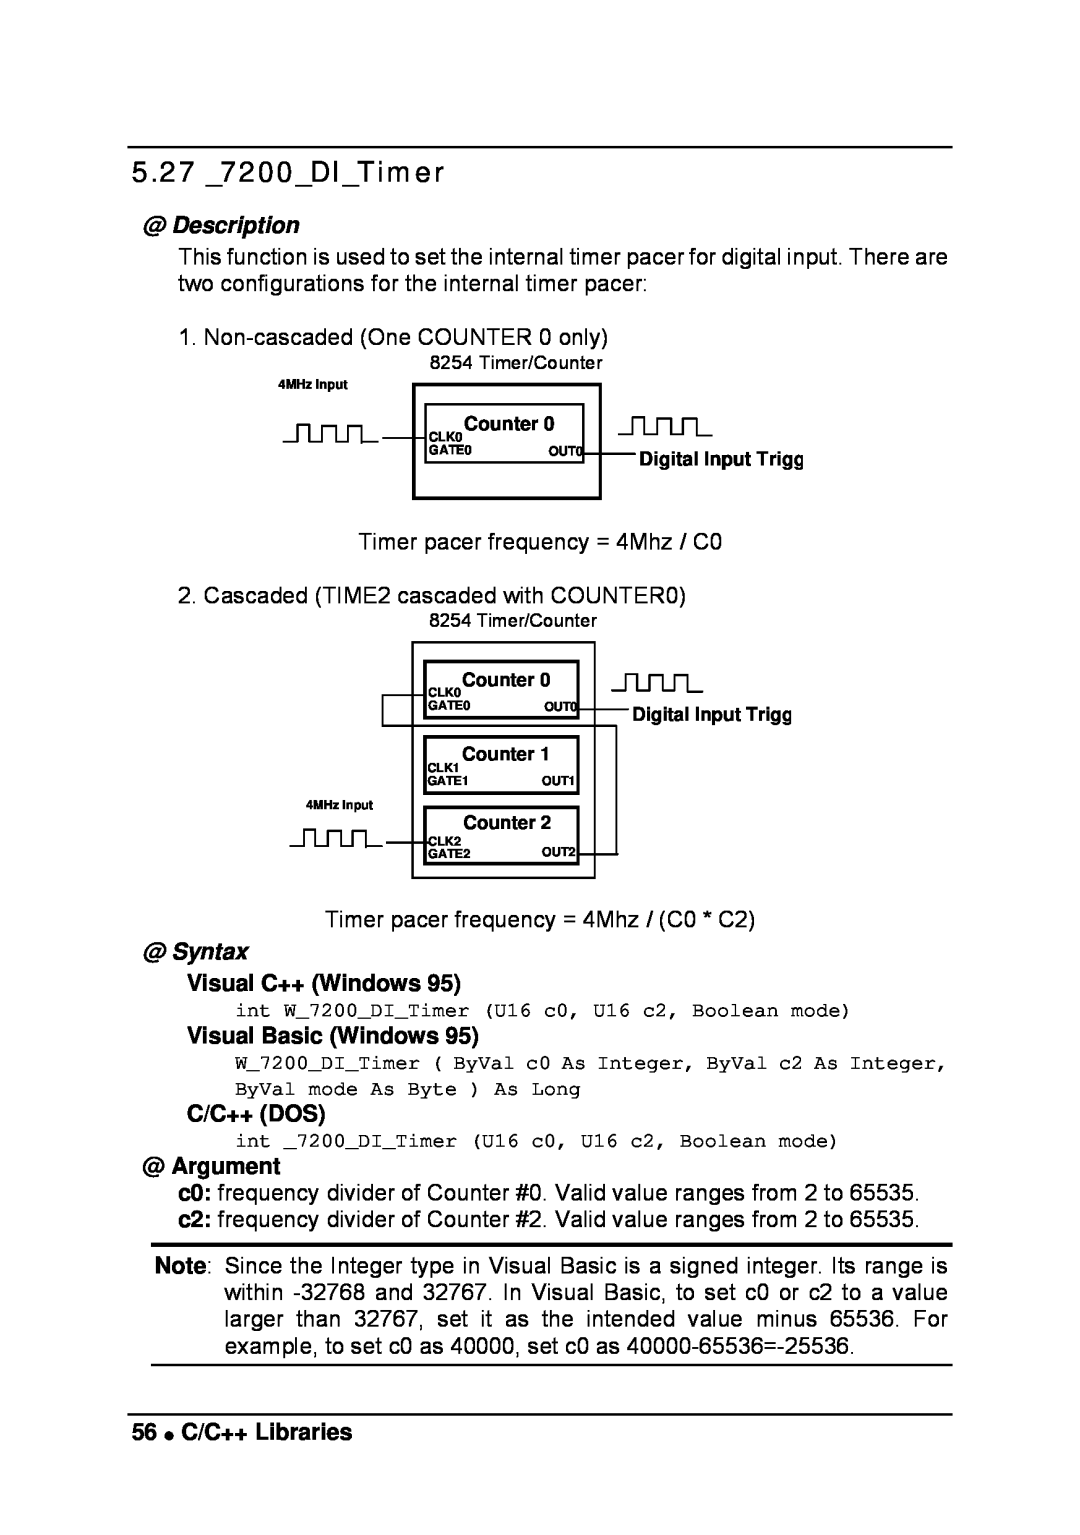 Intel LPCI-7200S manual 5.27 7200DITimer, @ Description, @ Syntax, Visual C++ Windows, Visual Basic Windows, C/C++ Dos 